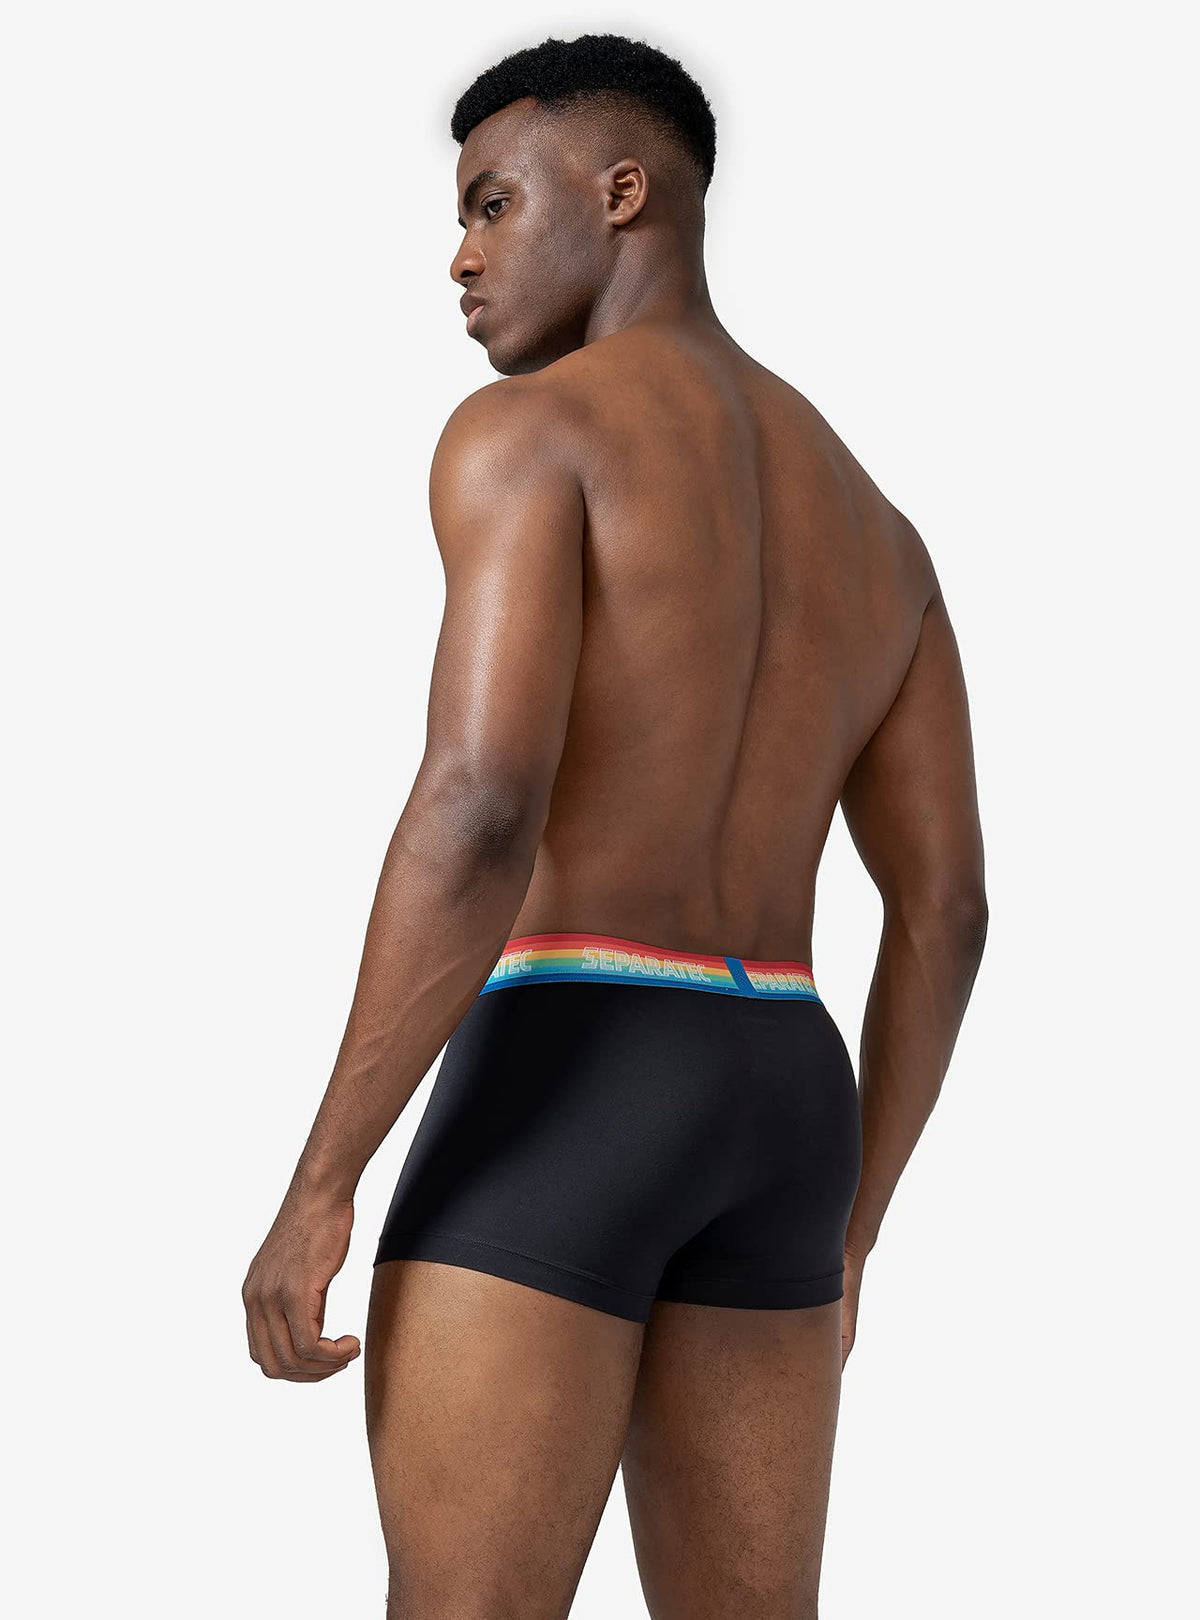 Buy Separatec Men's Underwear Moisture-Wicking Bamboo Rayon Boxer